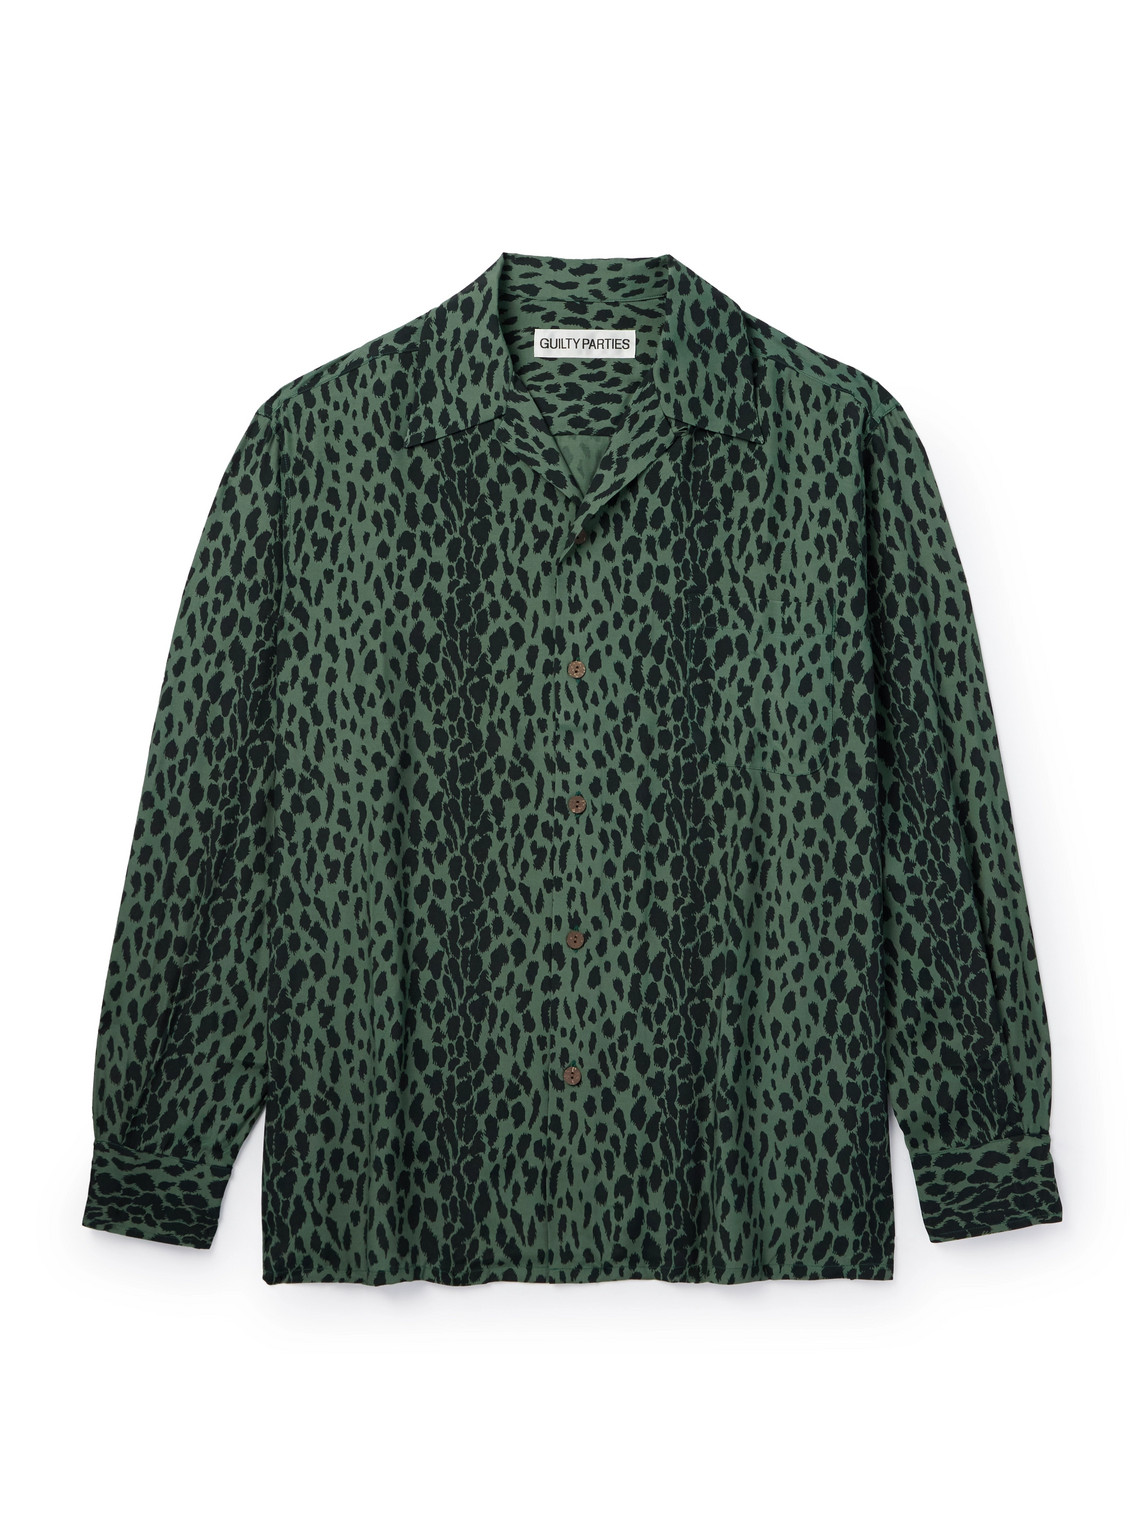 Wacko Maria Tim Lehi Convertible-collar Leopard-print Woven Shirt In Green